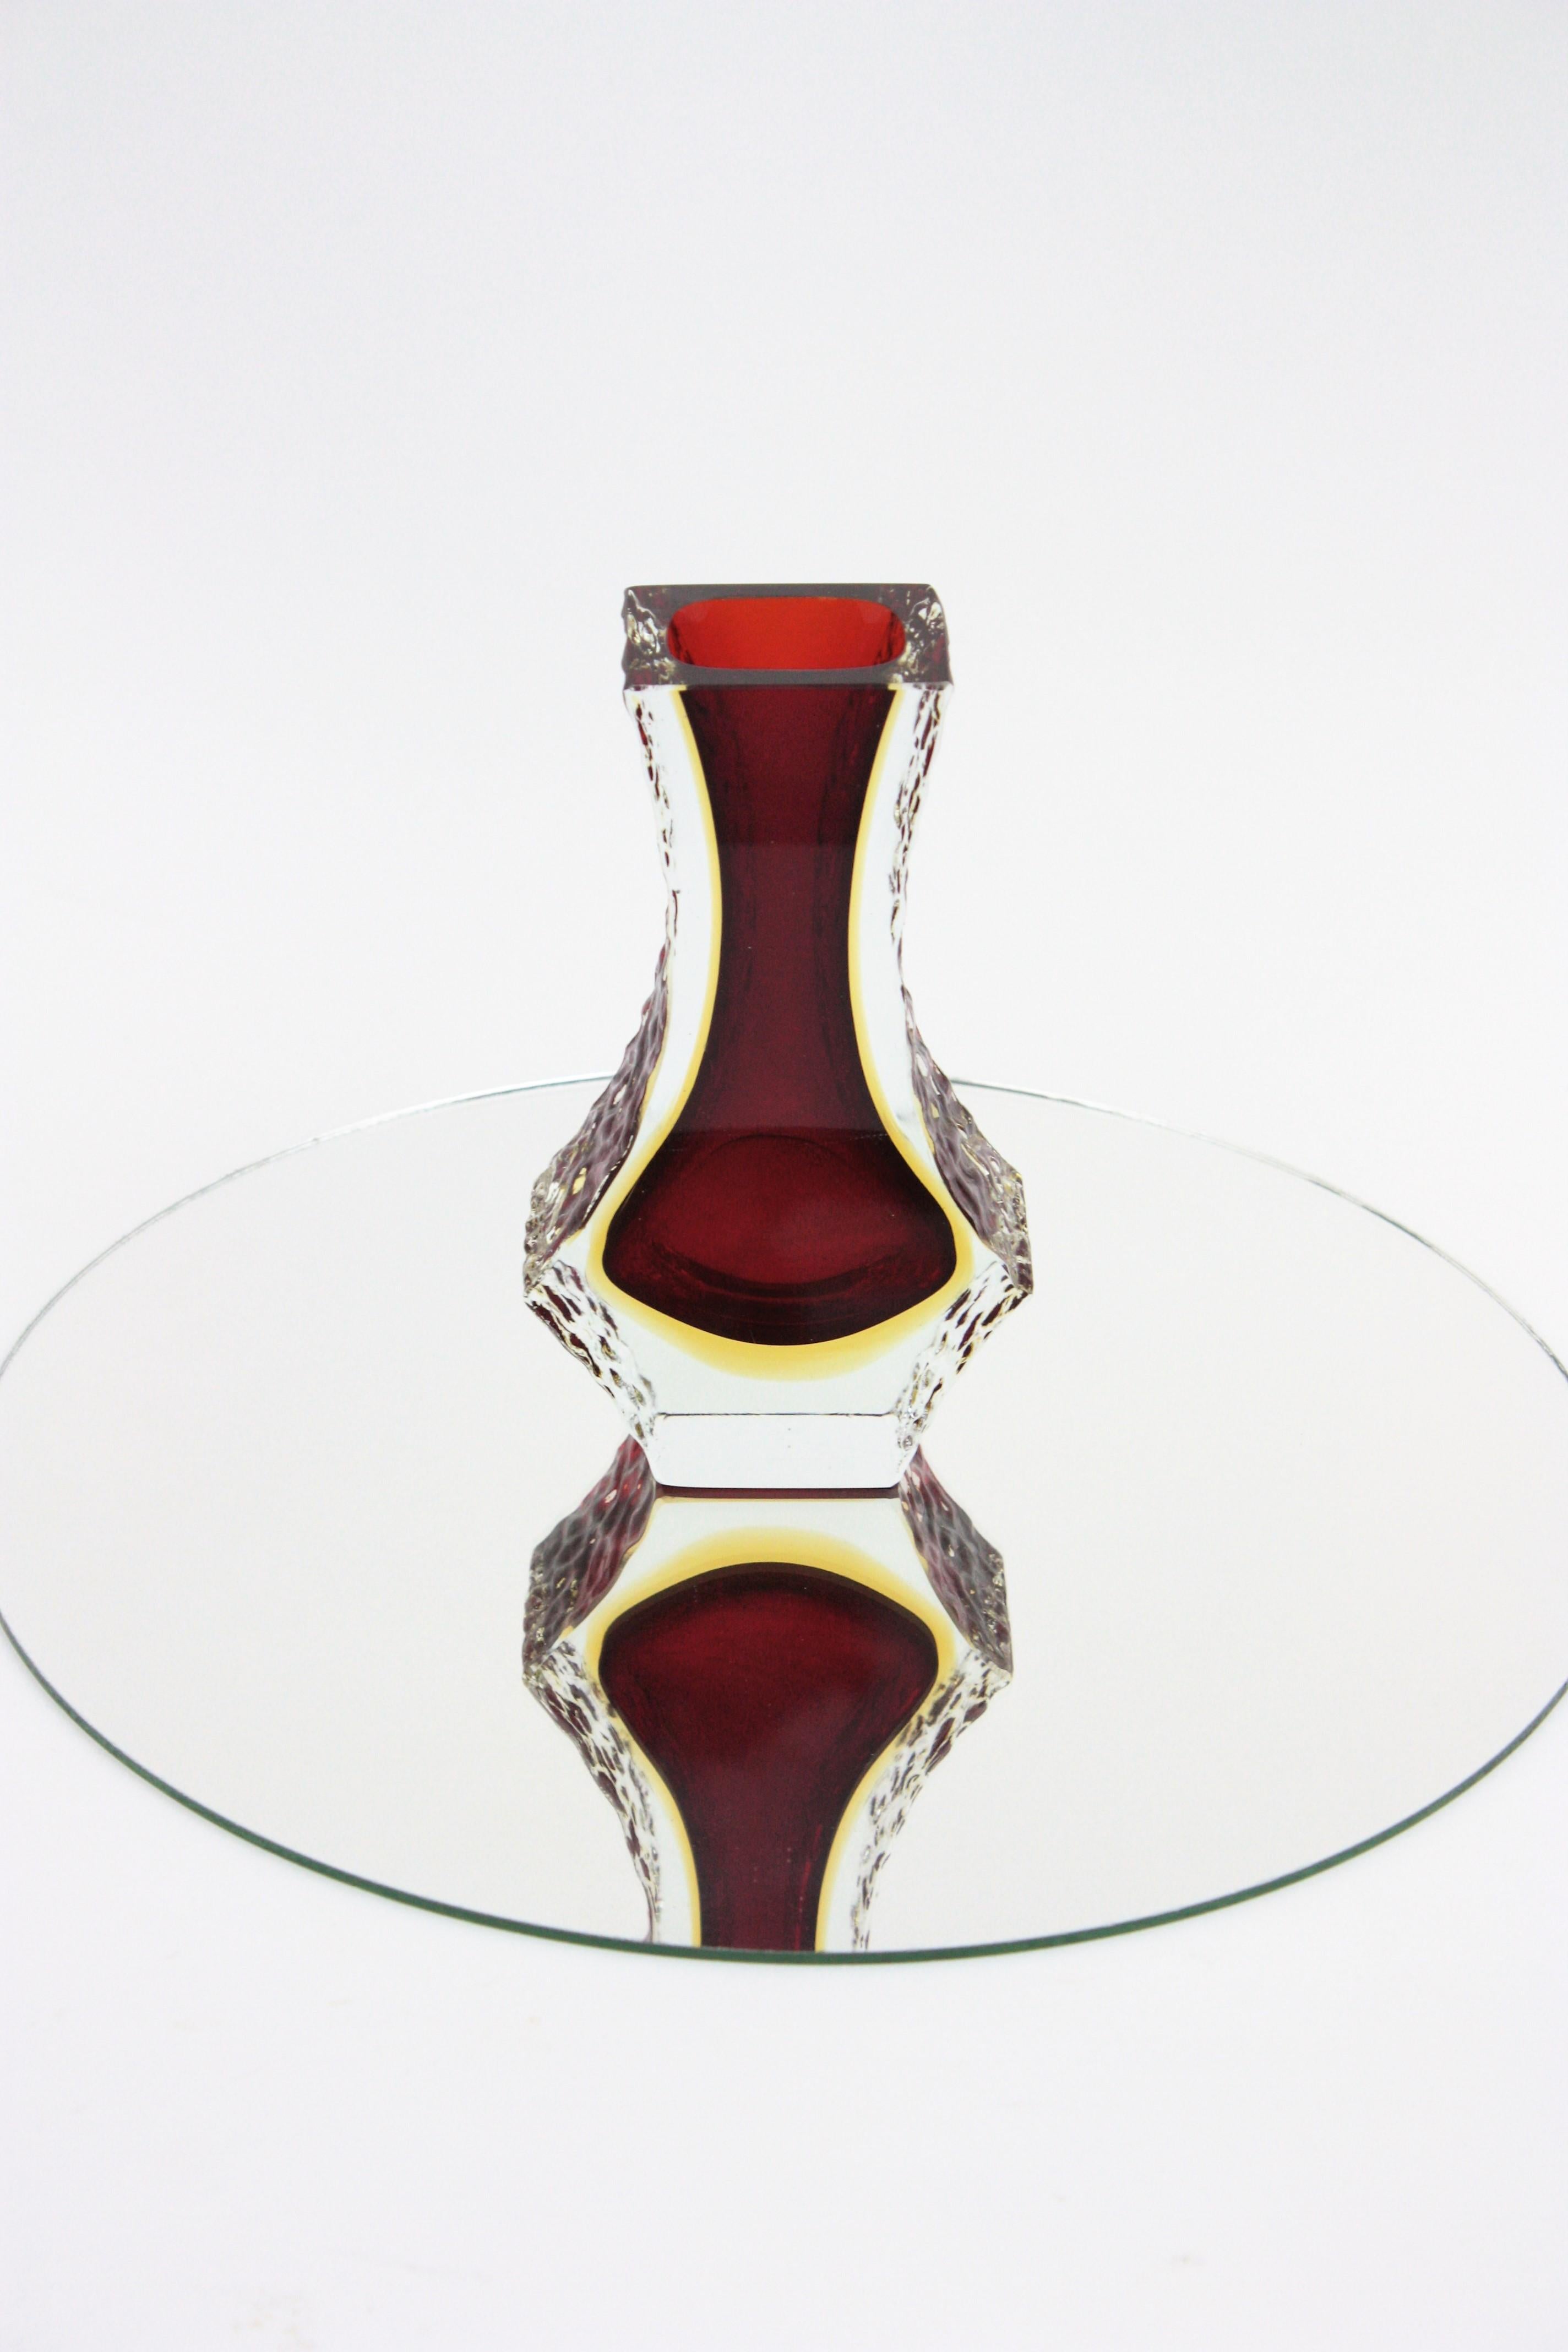 Mandruzzato Murano Sommerso Rot Gelb Eisglas Facettierte Vase  (20. Jahrhundert) im Angebot